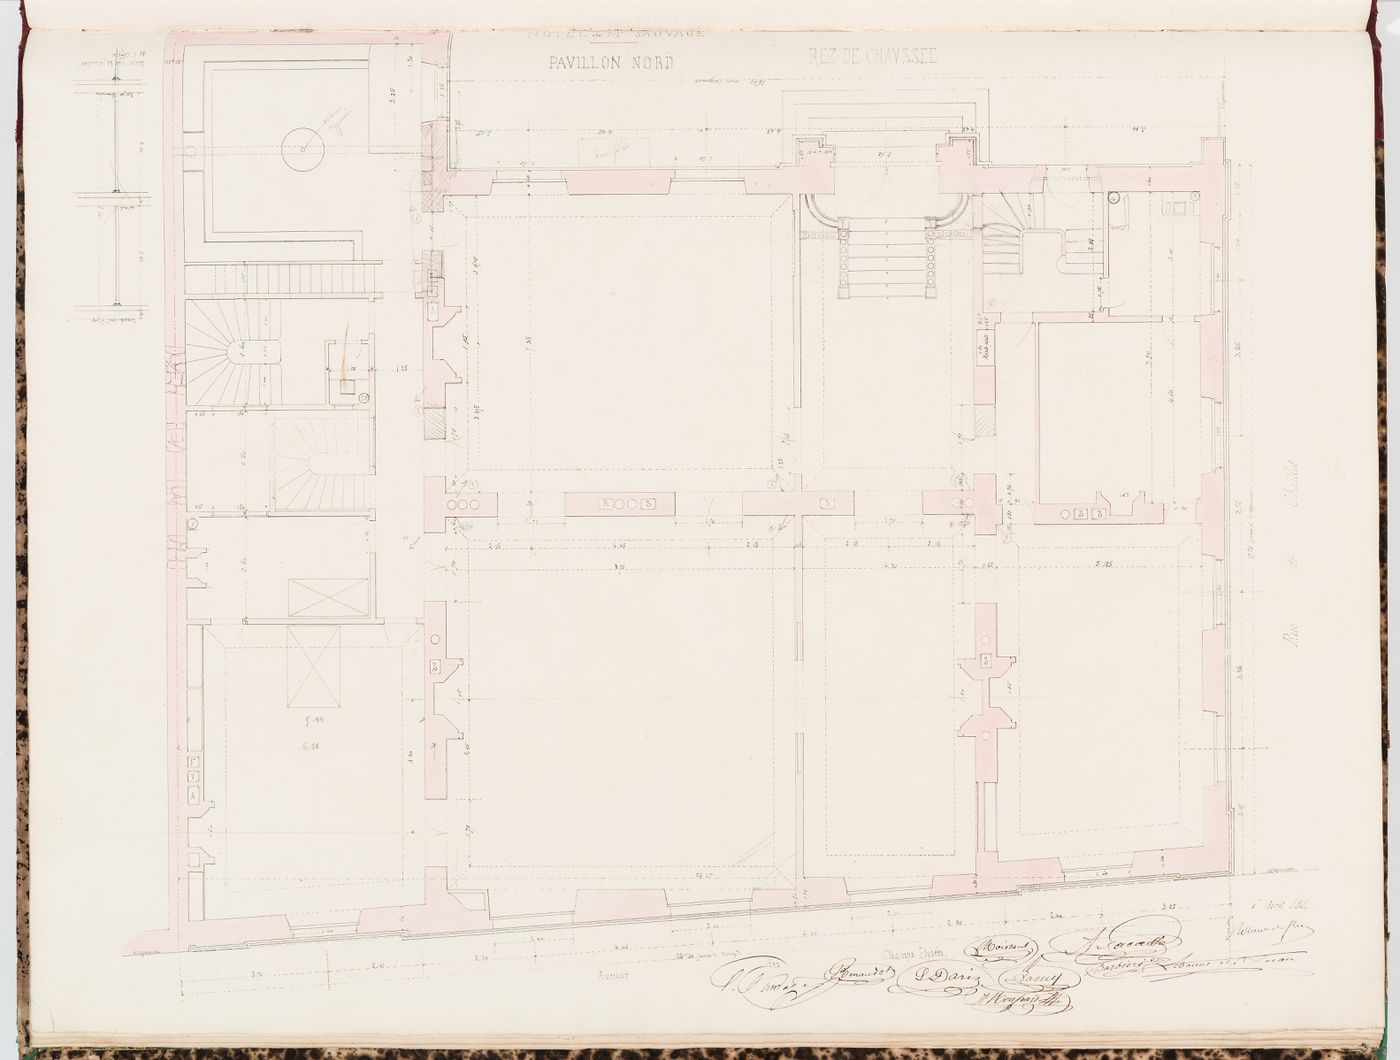 Ground floor plan for the "pavillon nord", including a detail of the "plancher de l'office" for Hôtel Sauvage, Paris